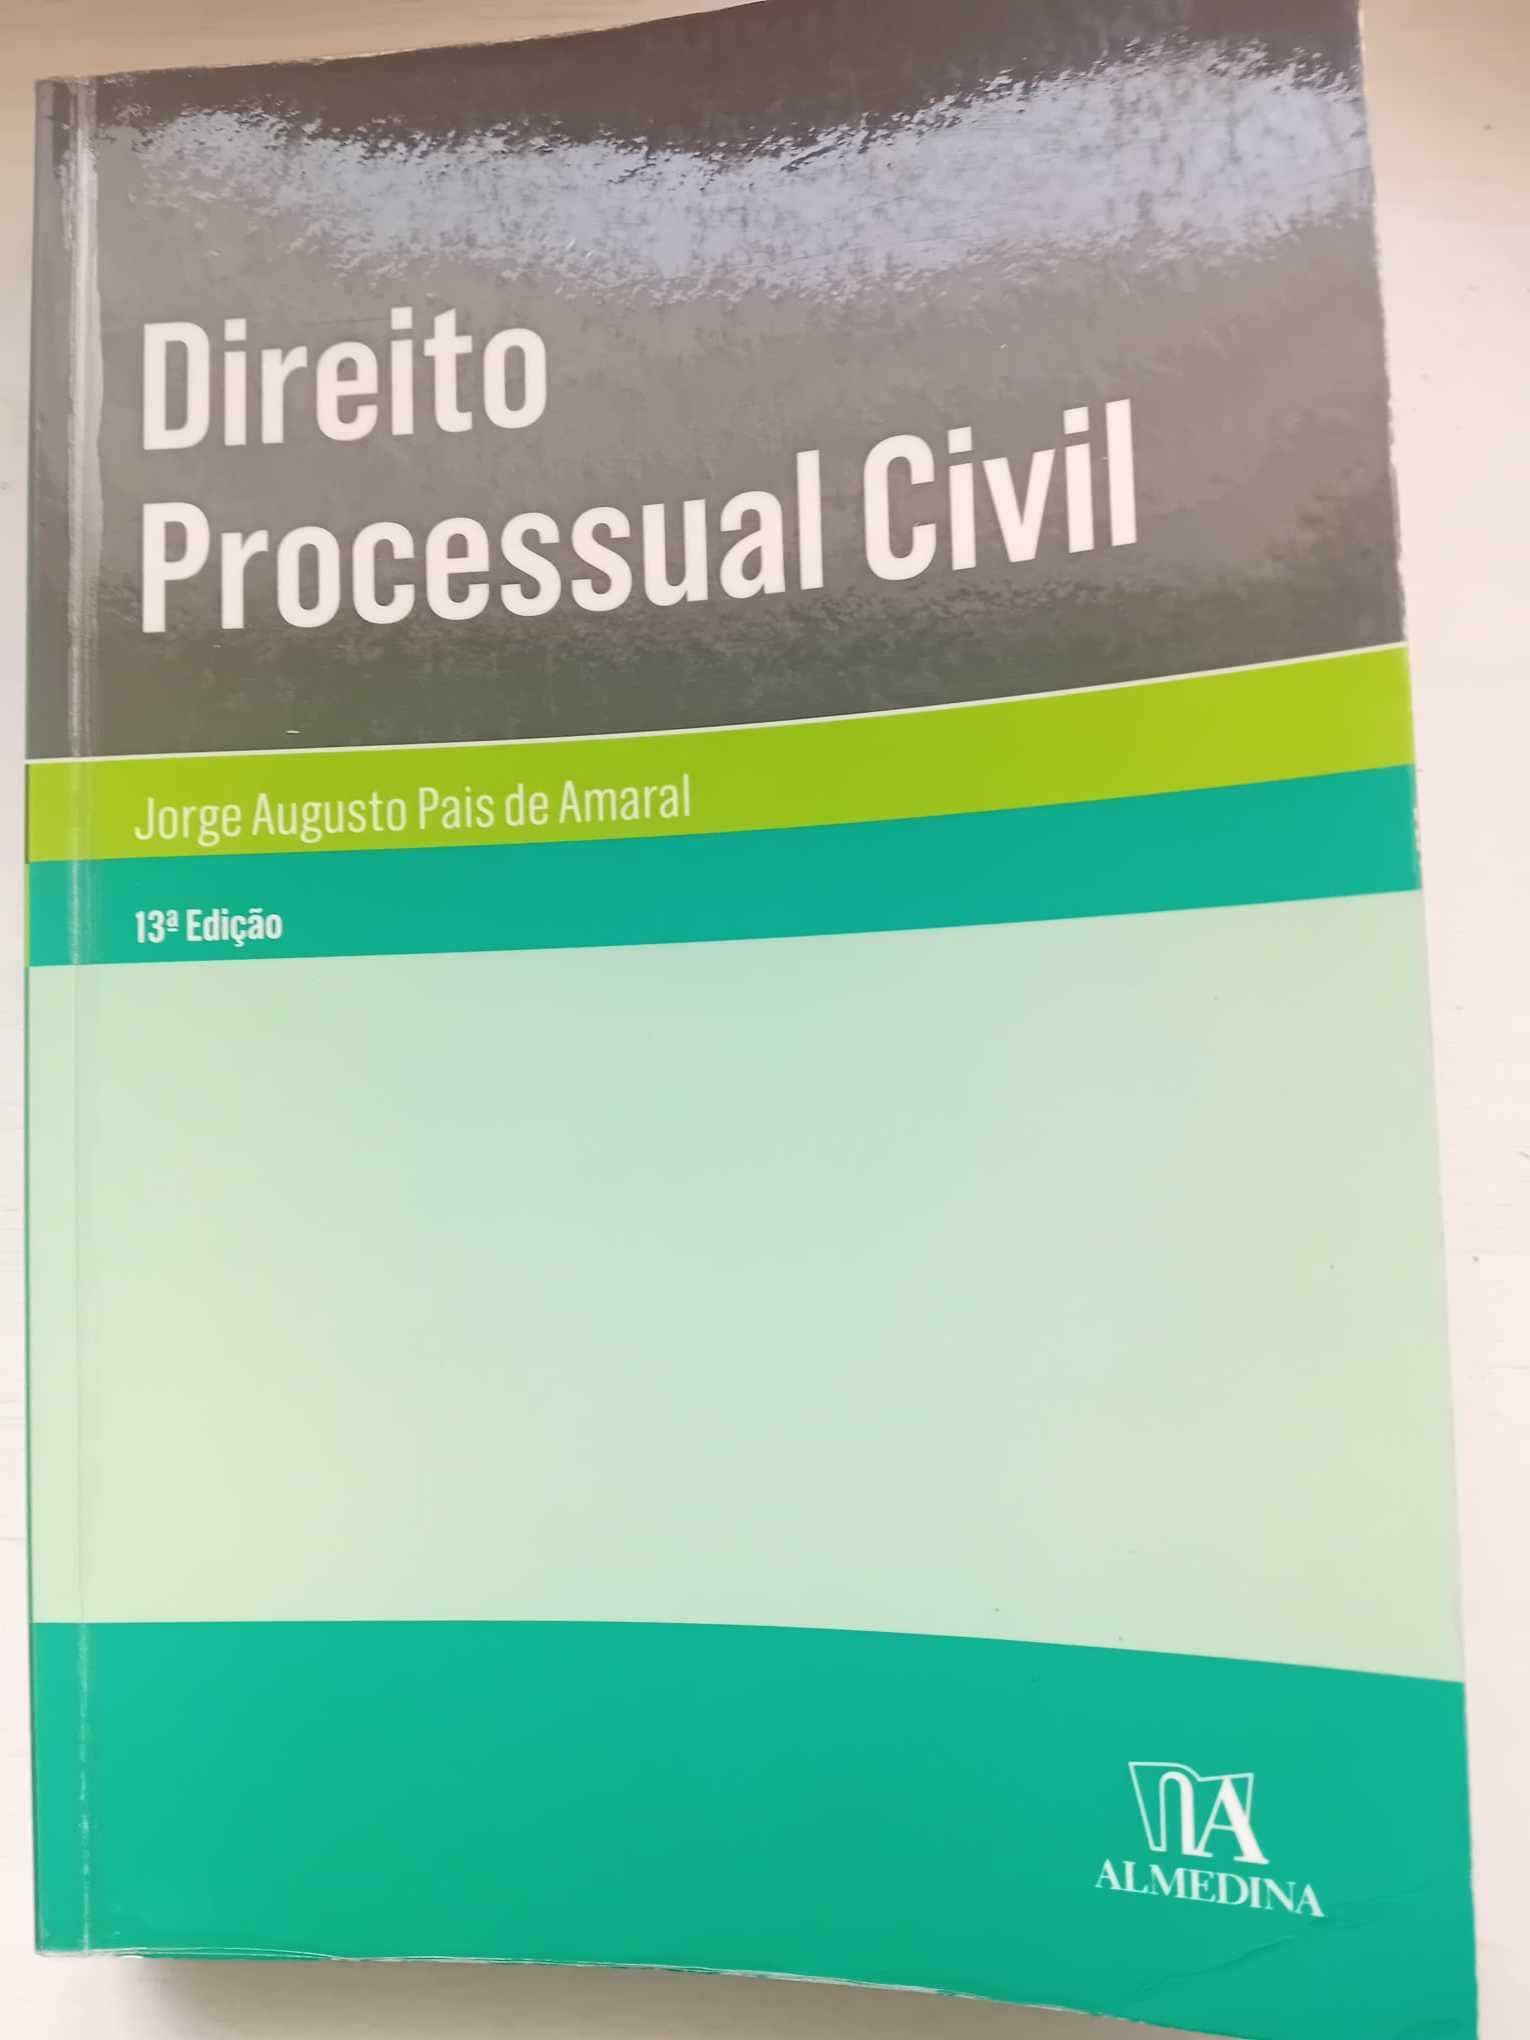 Direito Processual Civil, Jorge Augusto Pais do Amaral